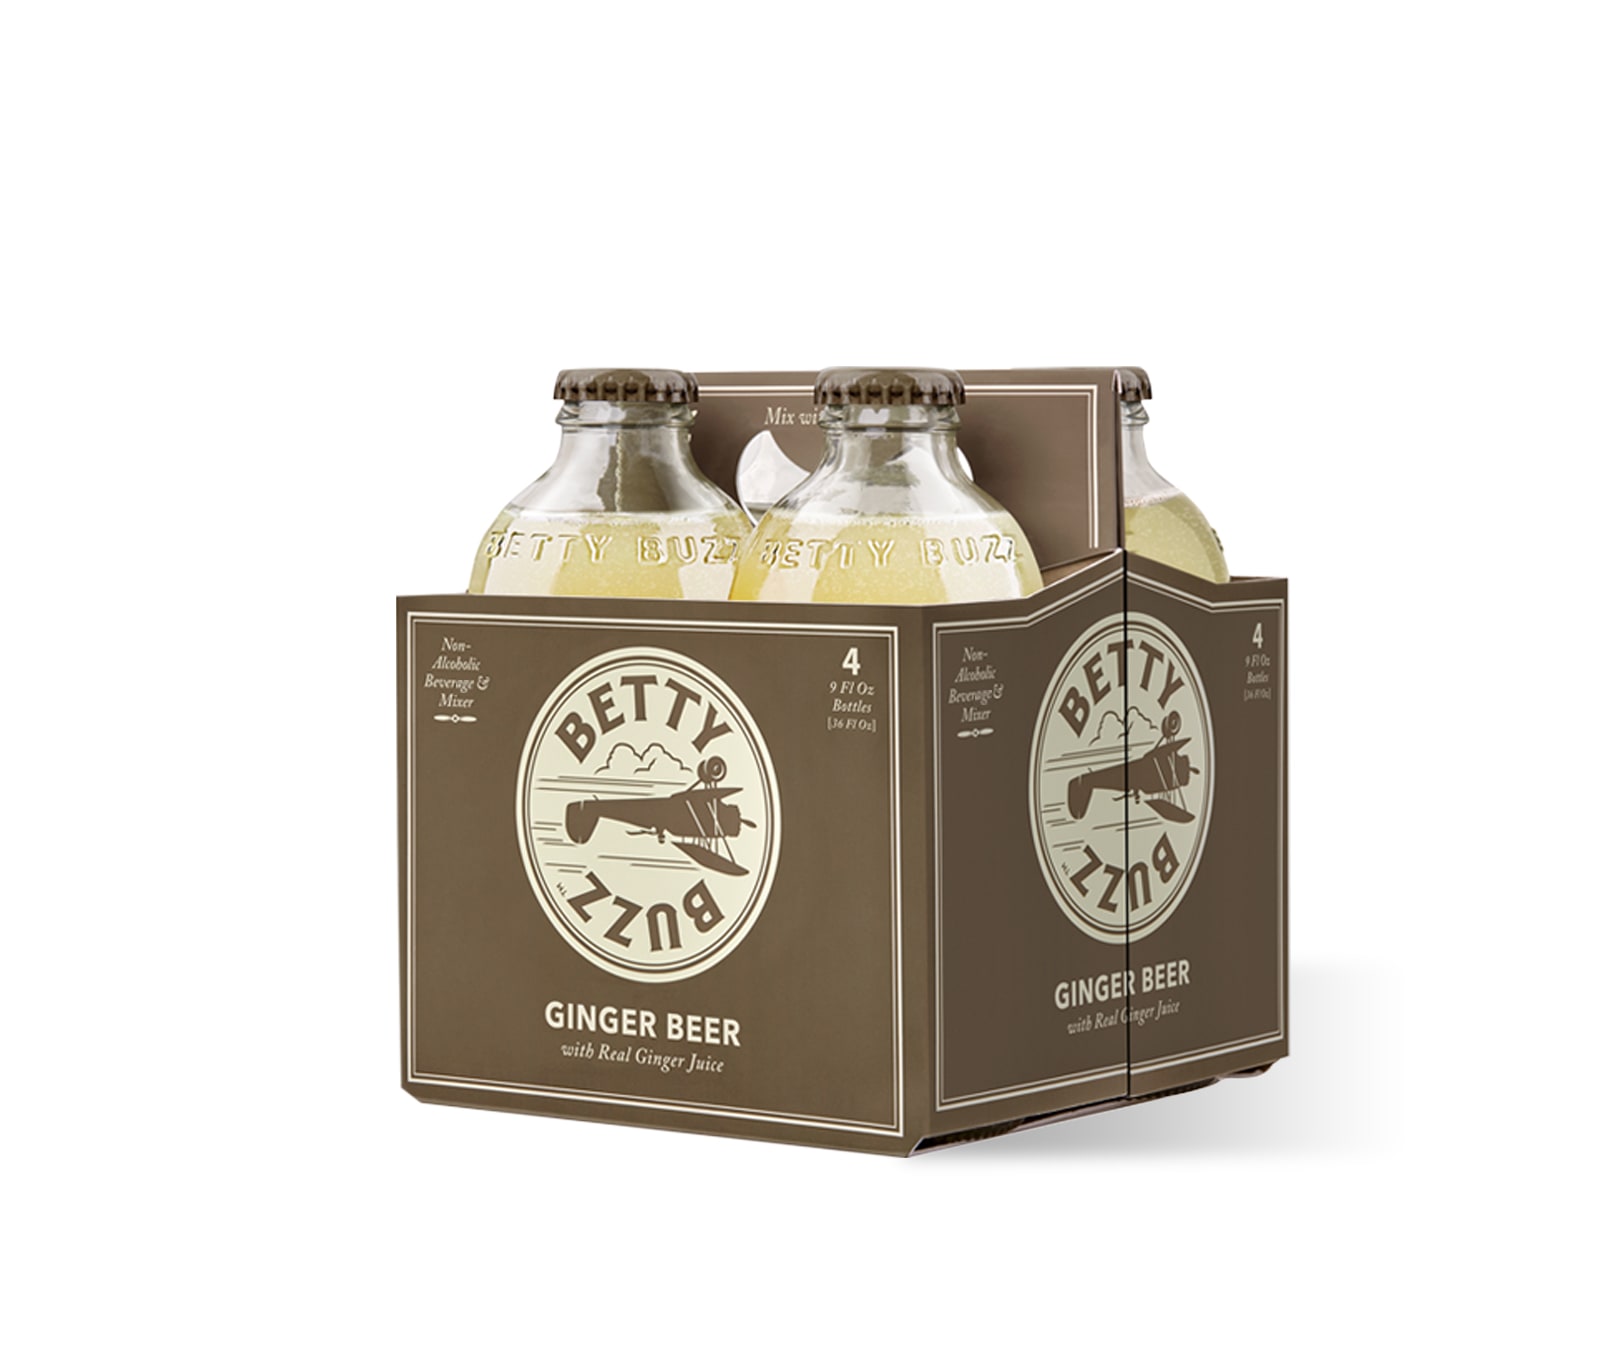 Betty Buzz Ginger beer 4-pack beverage packaging design